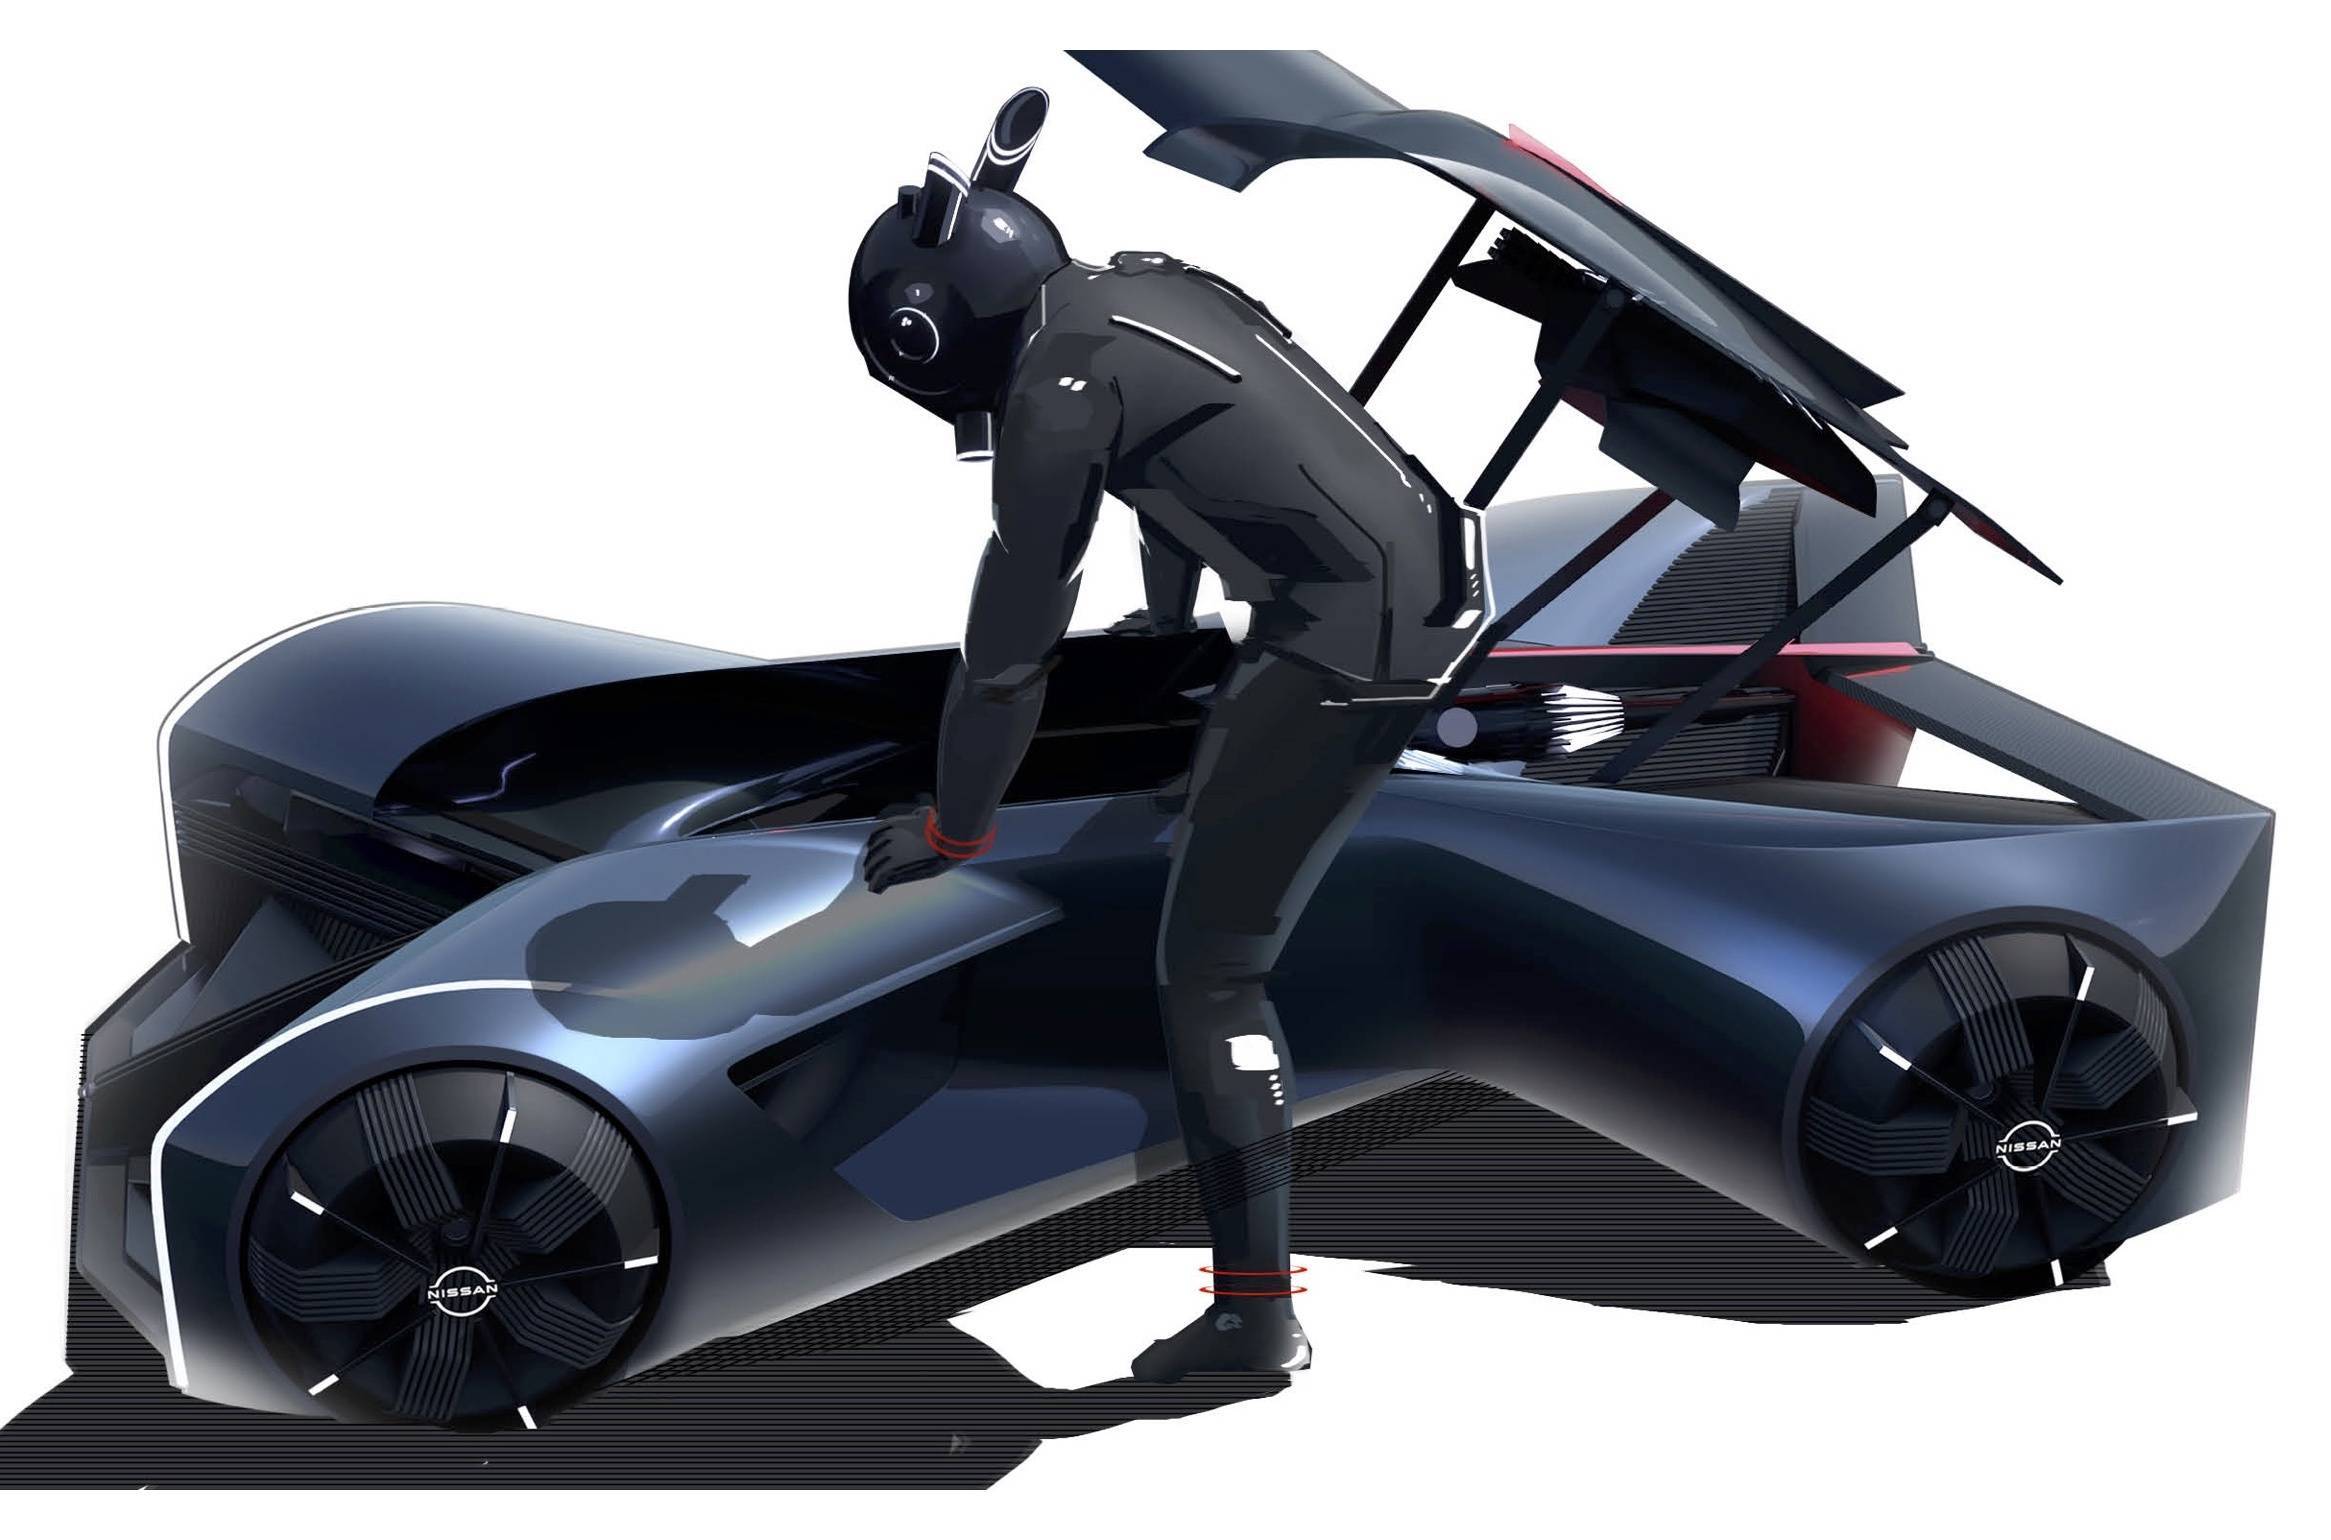 Nissan показала футуристический концепткар из 2050 года